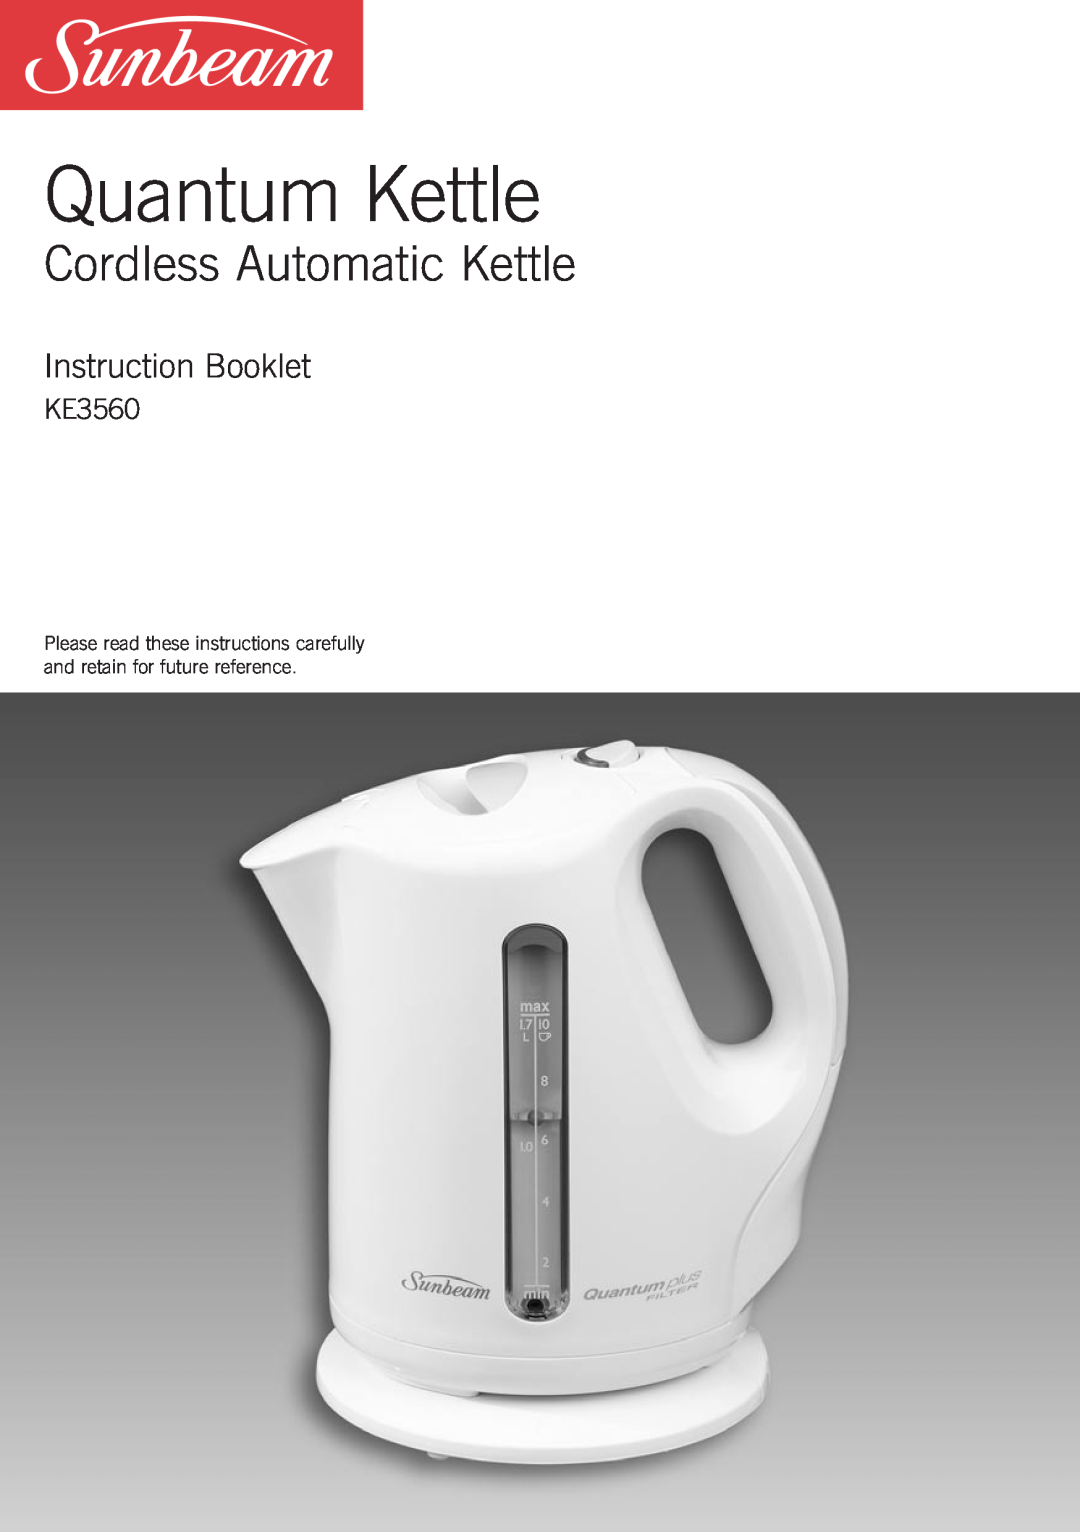 Sunbeam KE3560 manual Quantum Kettle, Cordless Automatic Kettle, Instruction Booklet 